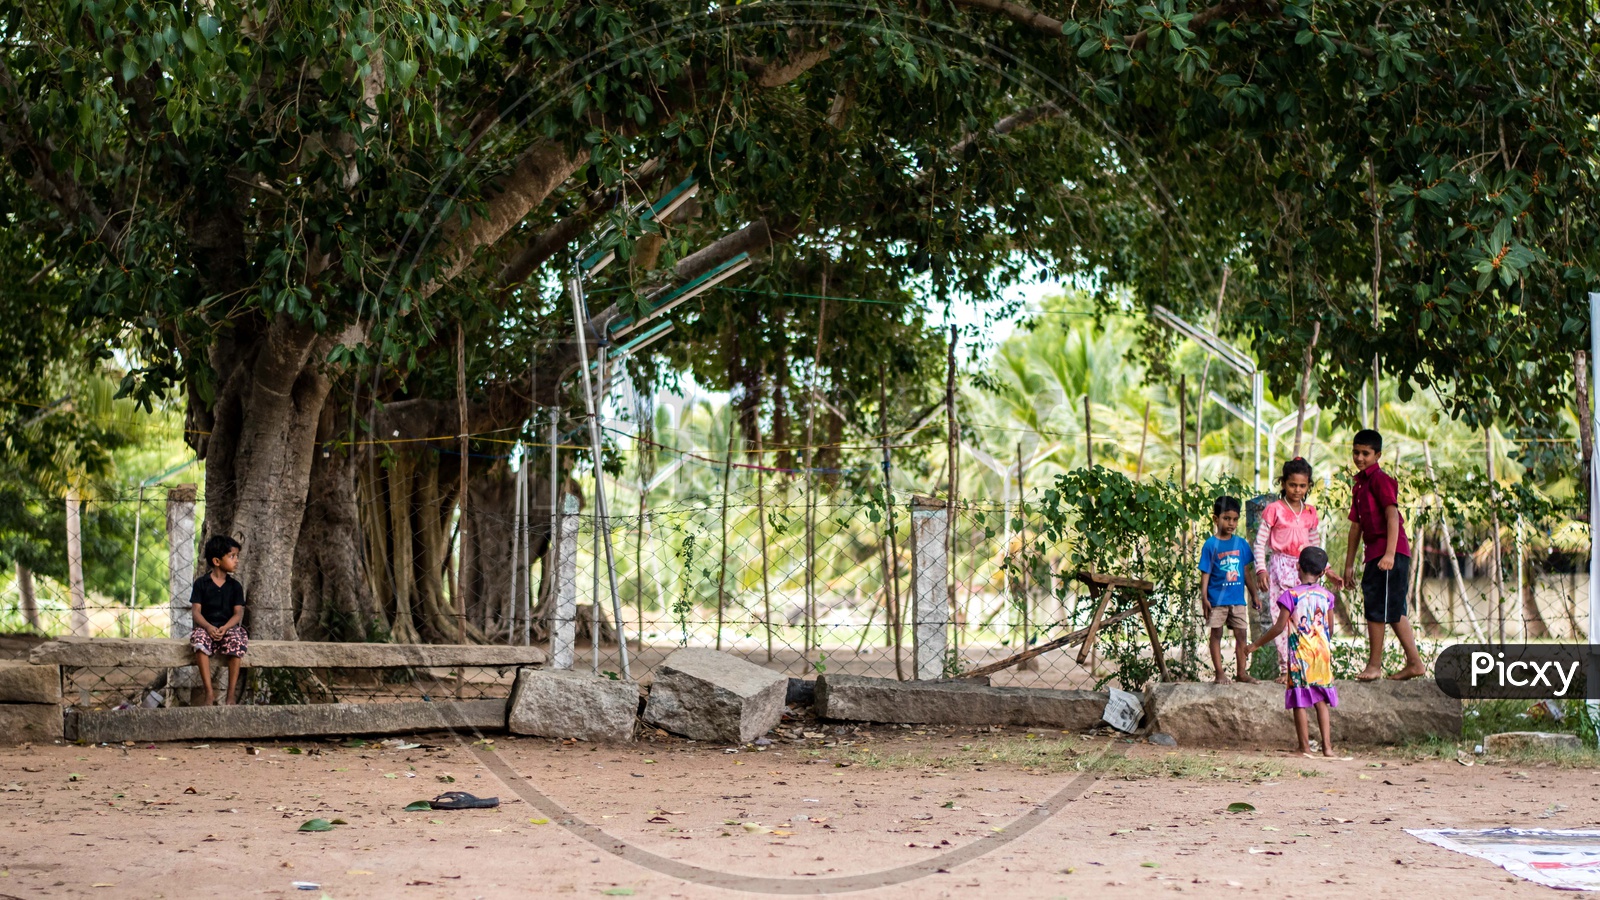 Children Playing Under a Big Banyan Tree In Rural Villages